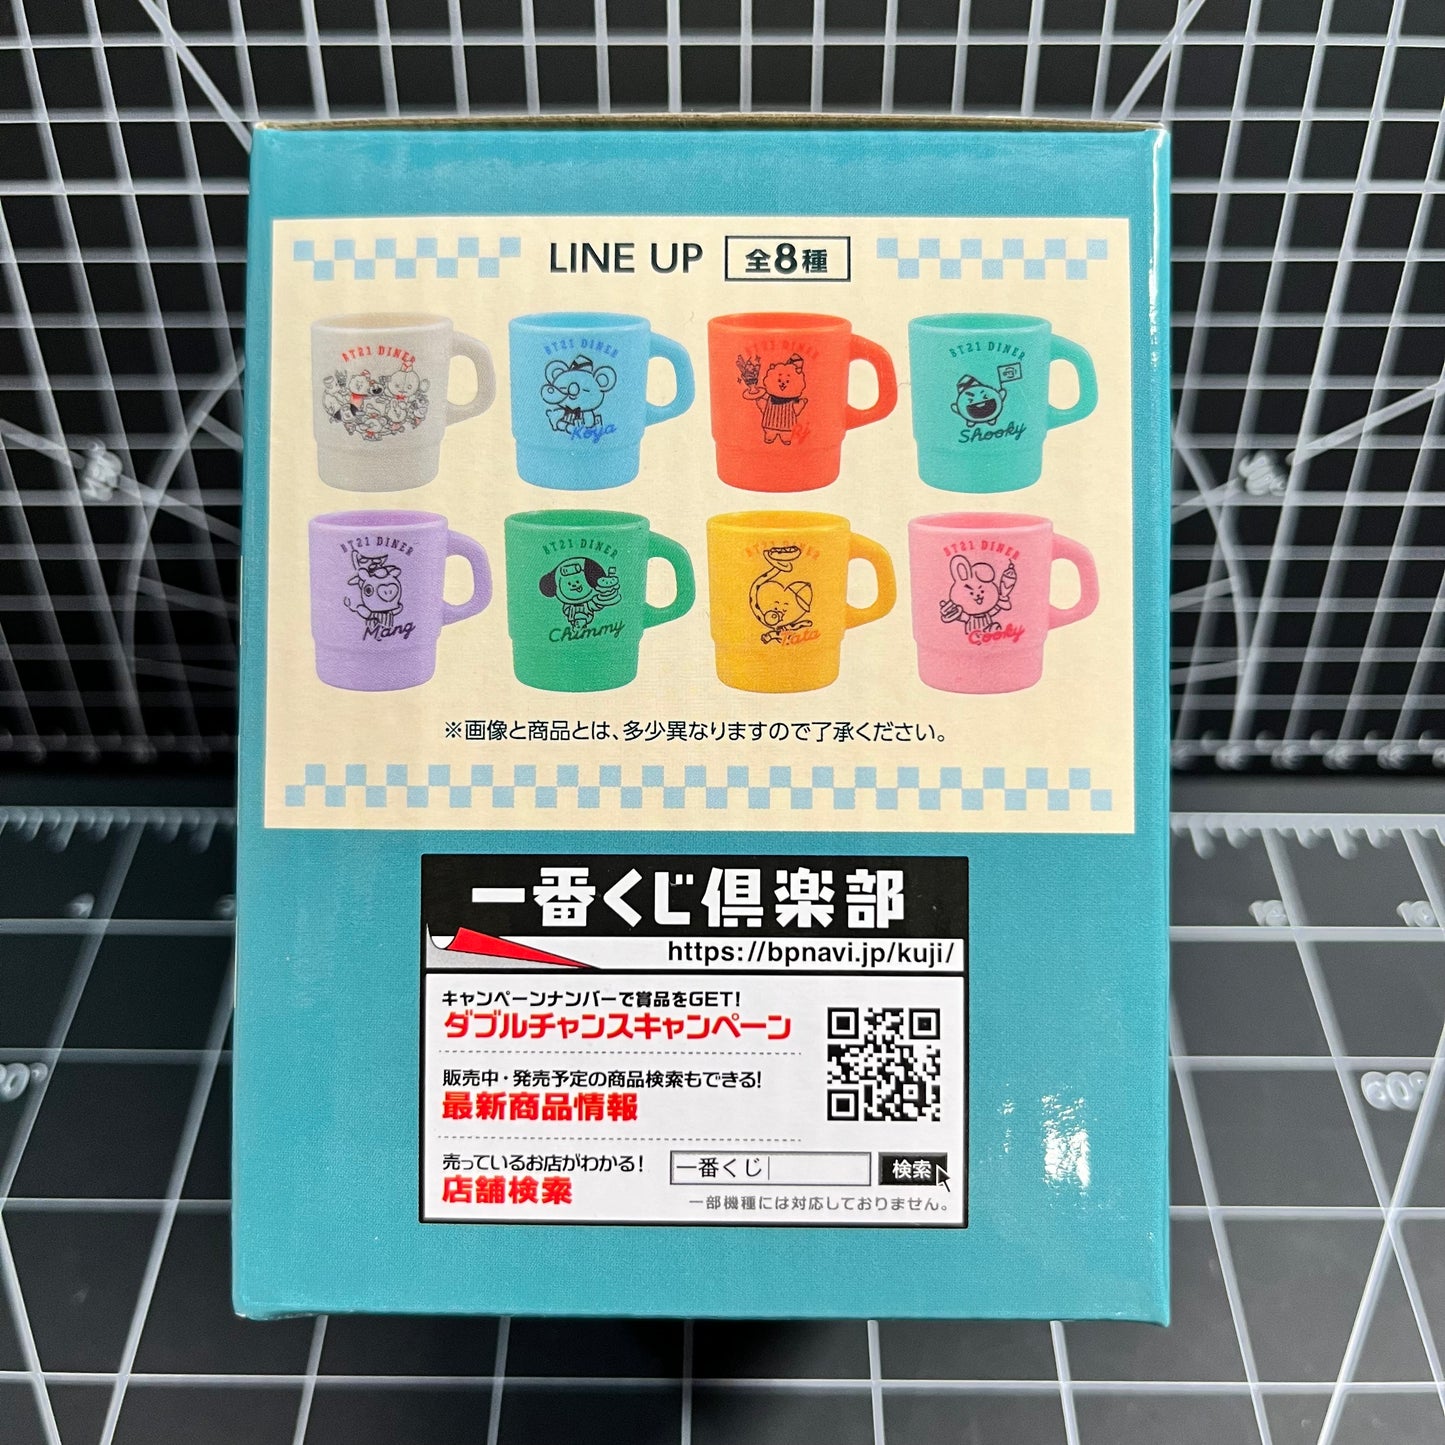 BTS BT21 Diner Official Merchandise Small Plastic Cup/Mug - Koya (RM)